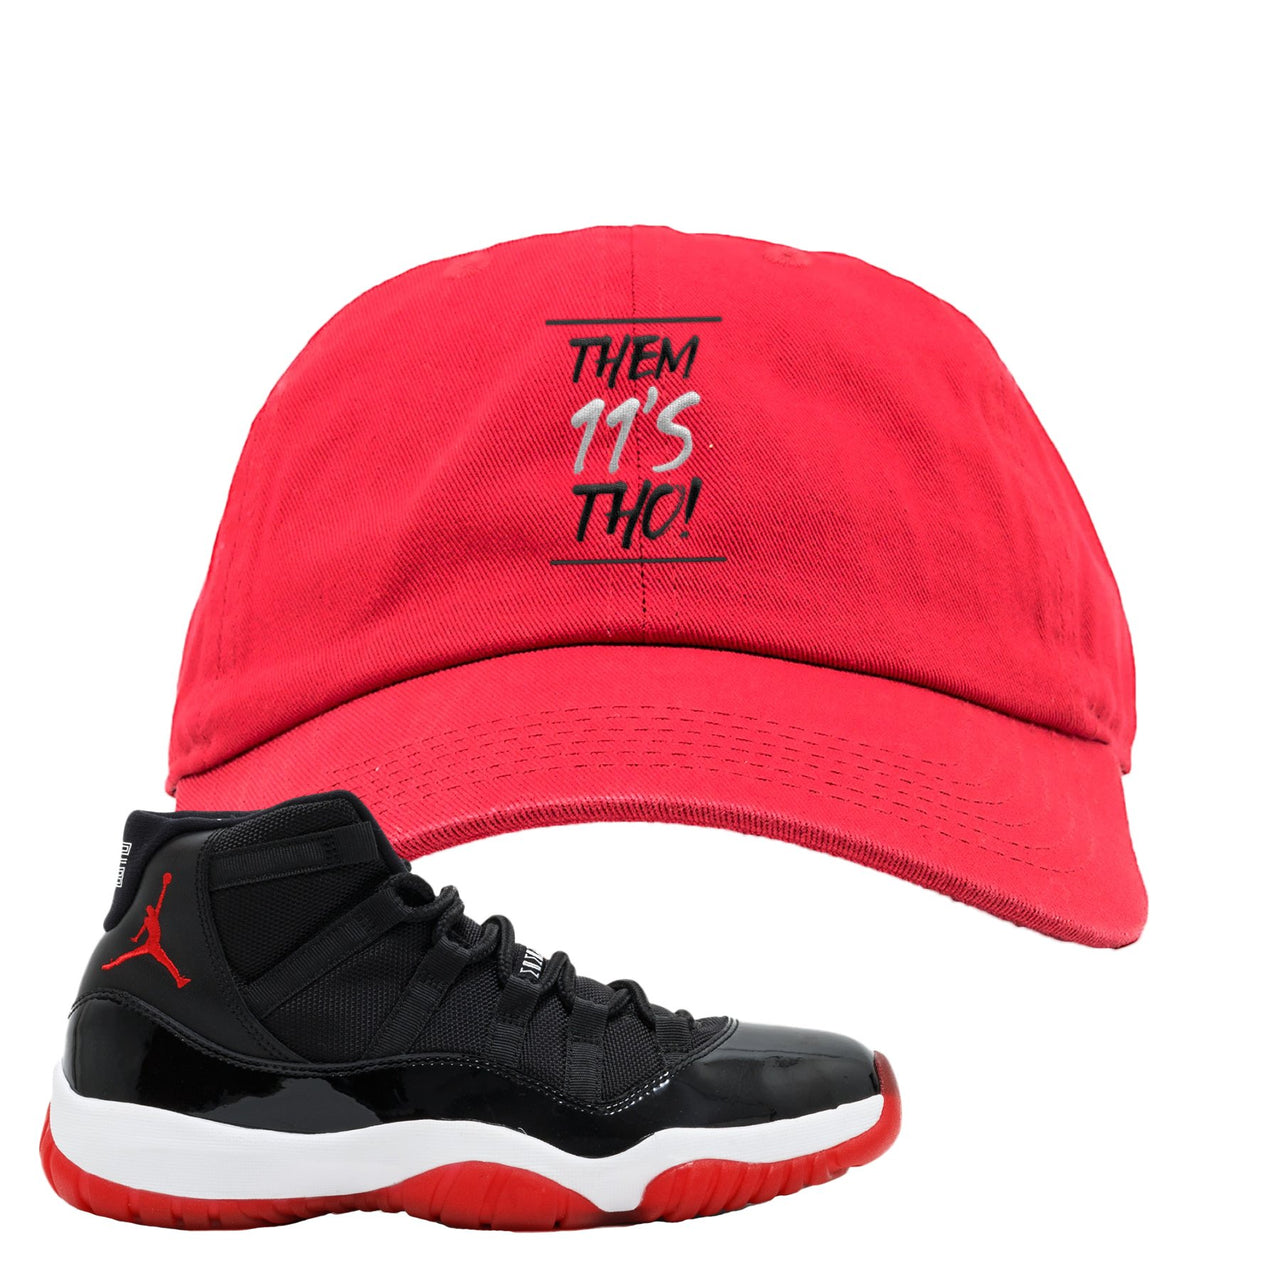 Jordan 11 Bred Them 11s Tho! Red Sneaker Hook Up Dad Hat